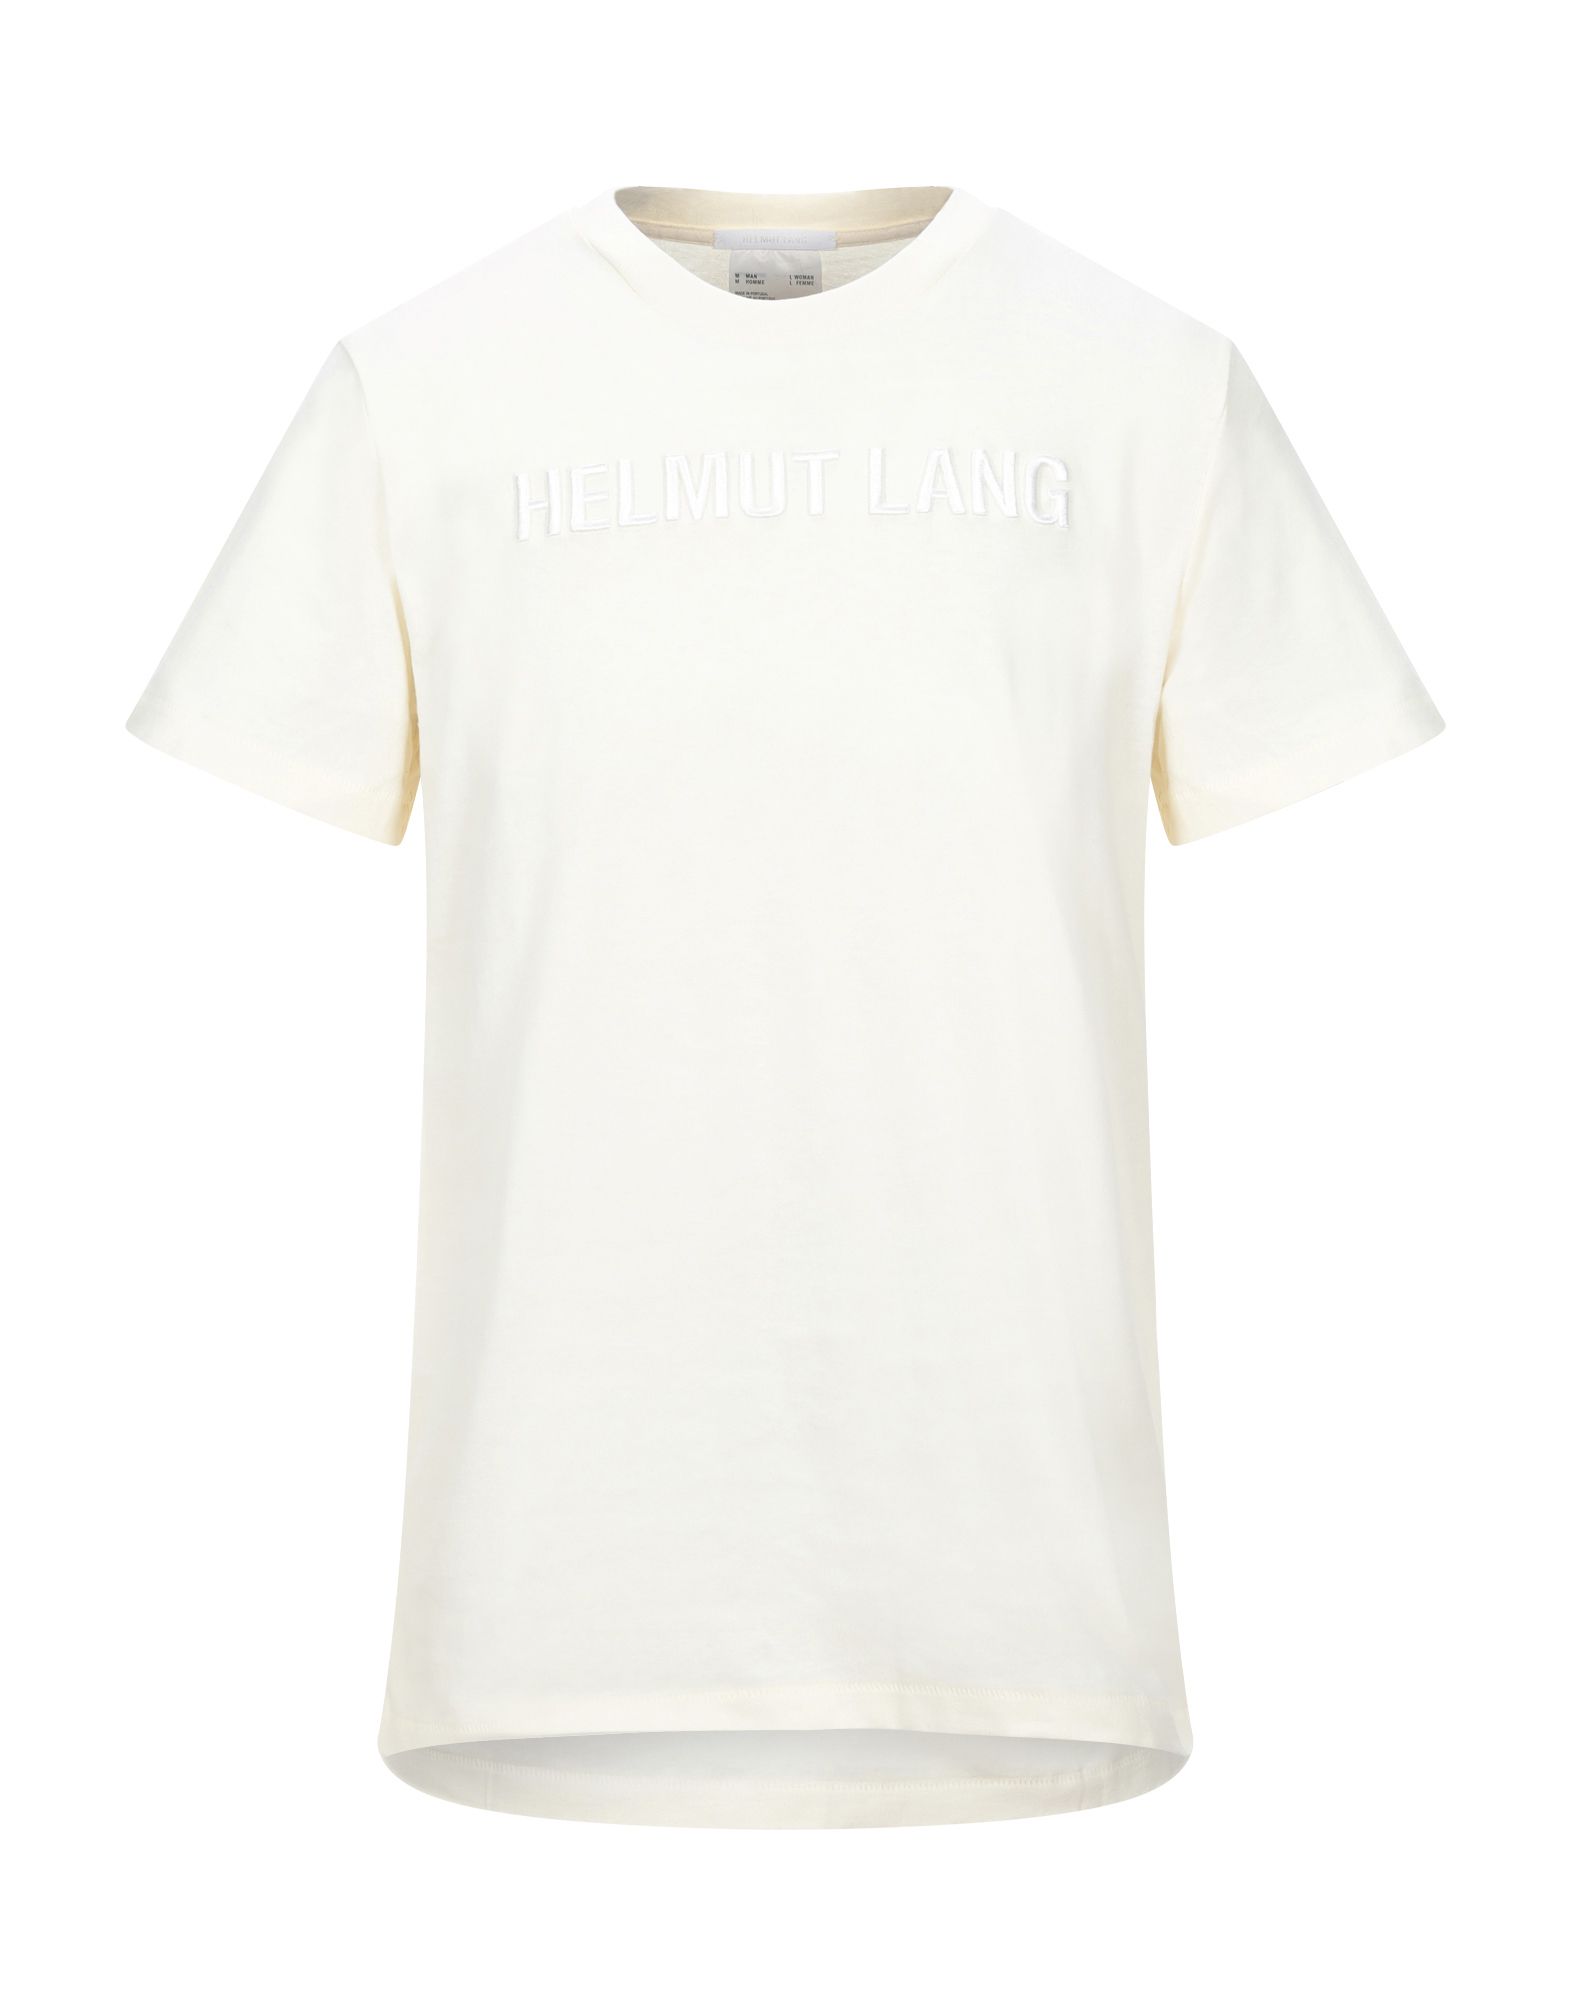 HELMUT LANG T-shirts - Item 12463228